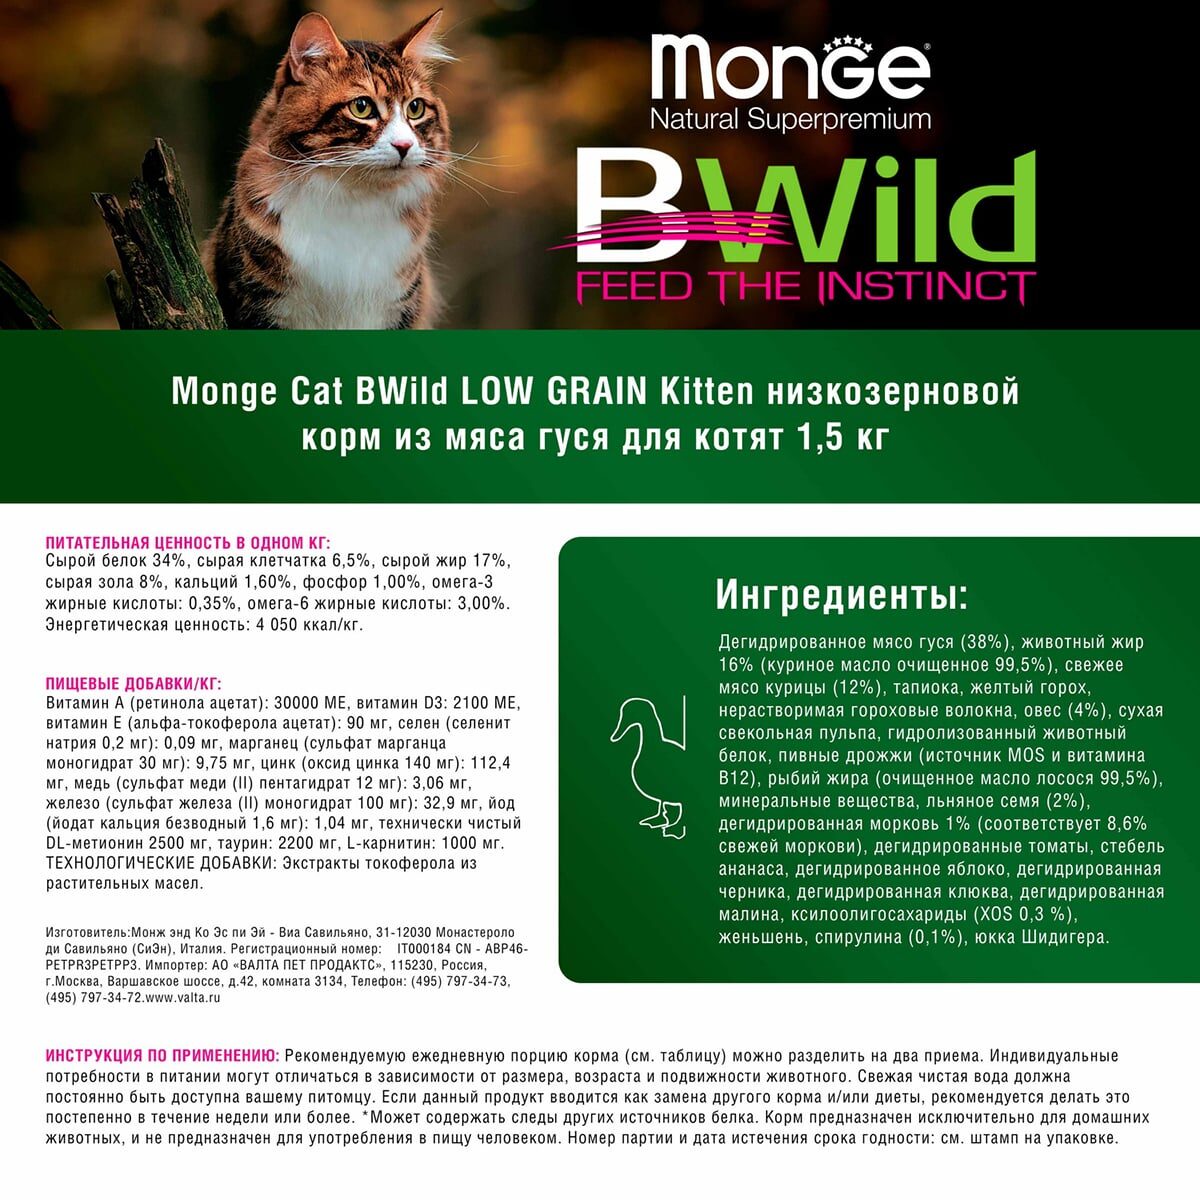 Низкозерновой сухой корм Monge Cat BWild LOW GRAIN Kitten для котят (Из мяса гуся, 1.5кг)